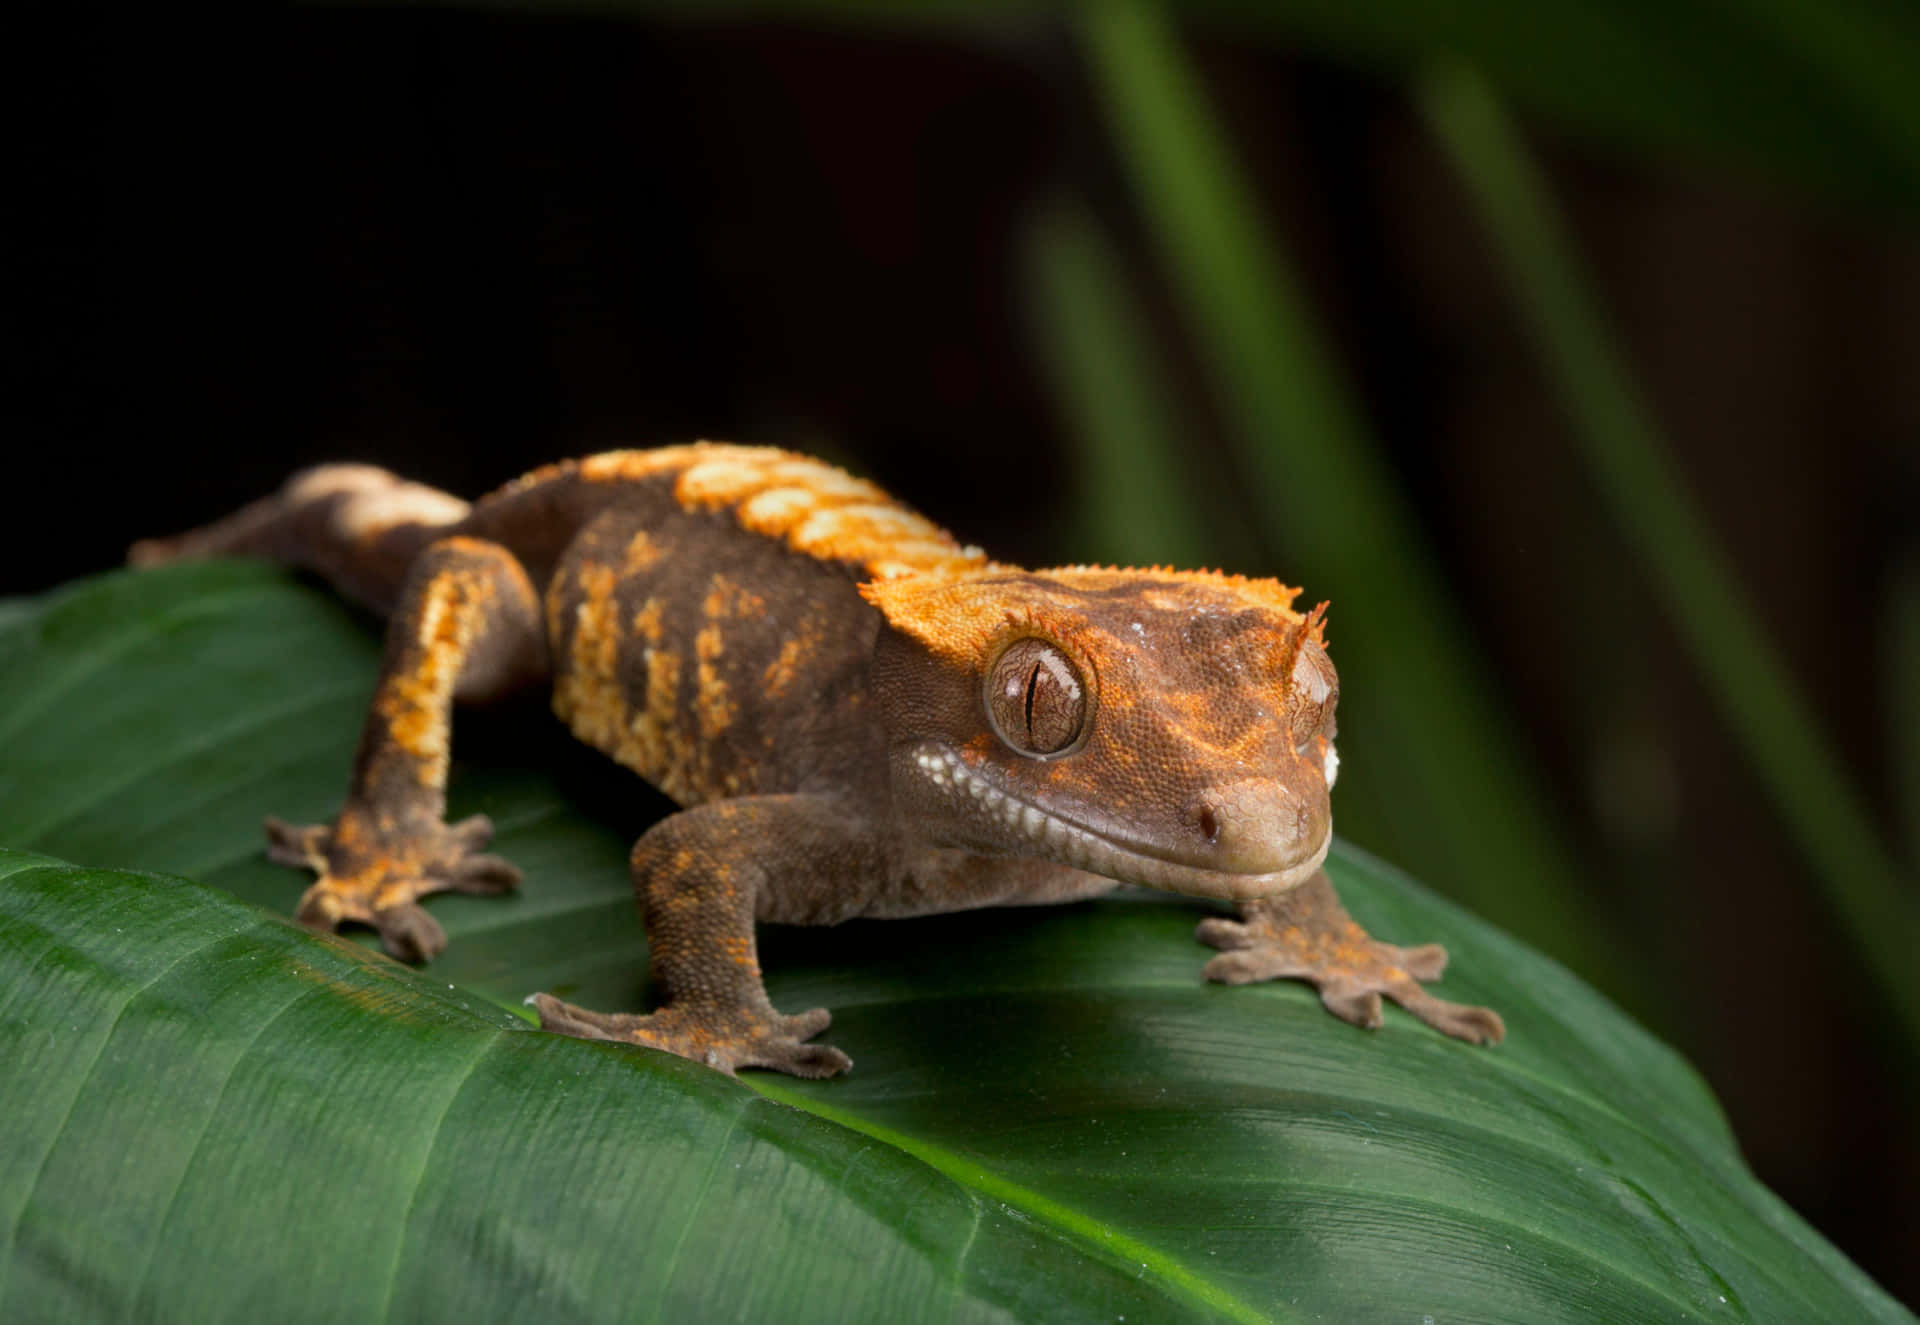 A Gecko On A Leaf With A Black Background